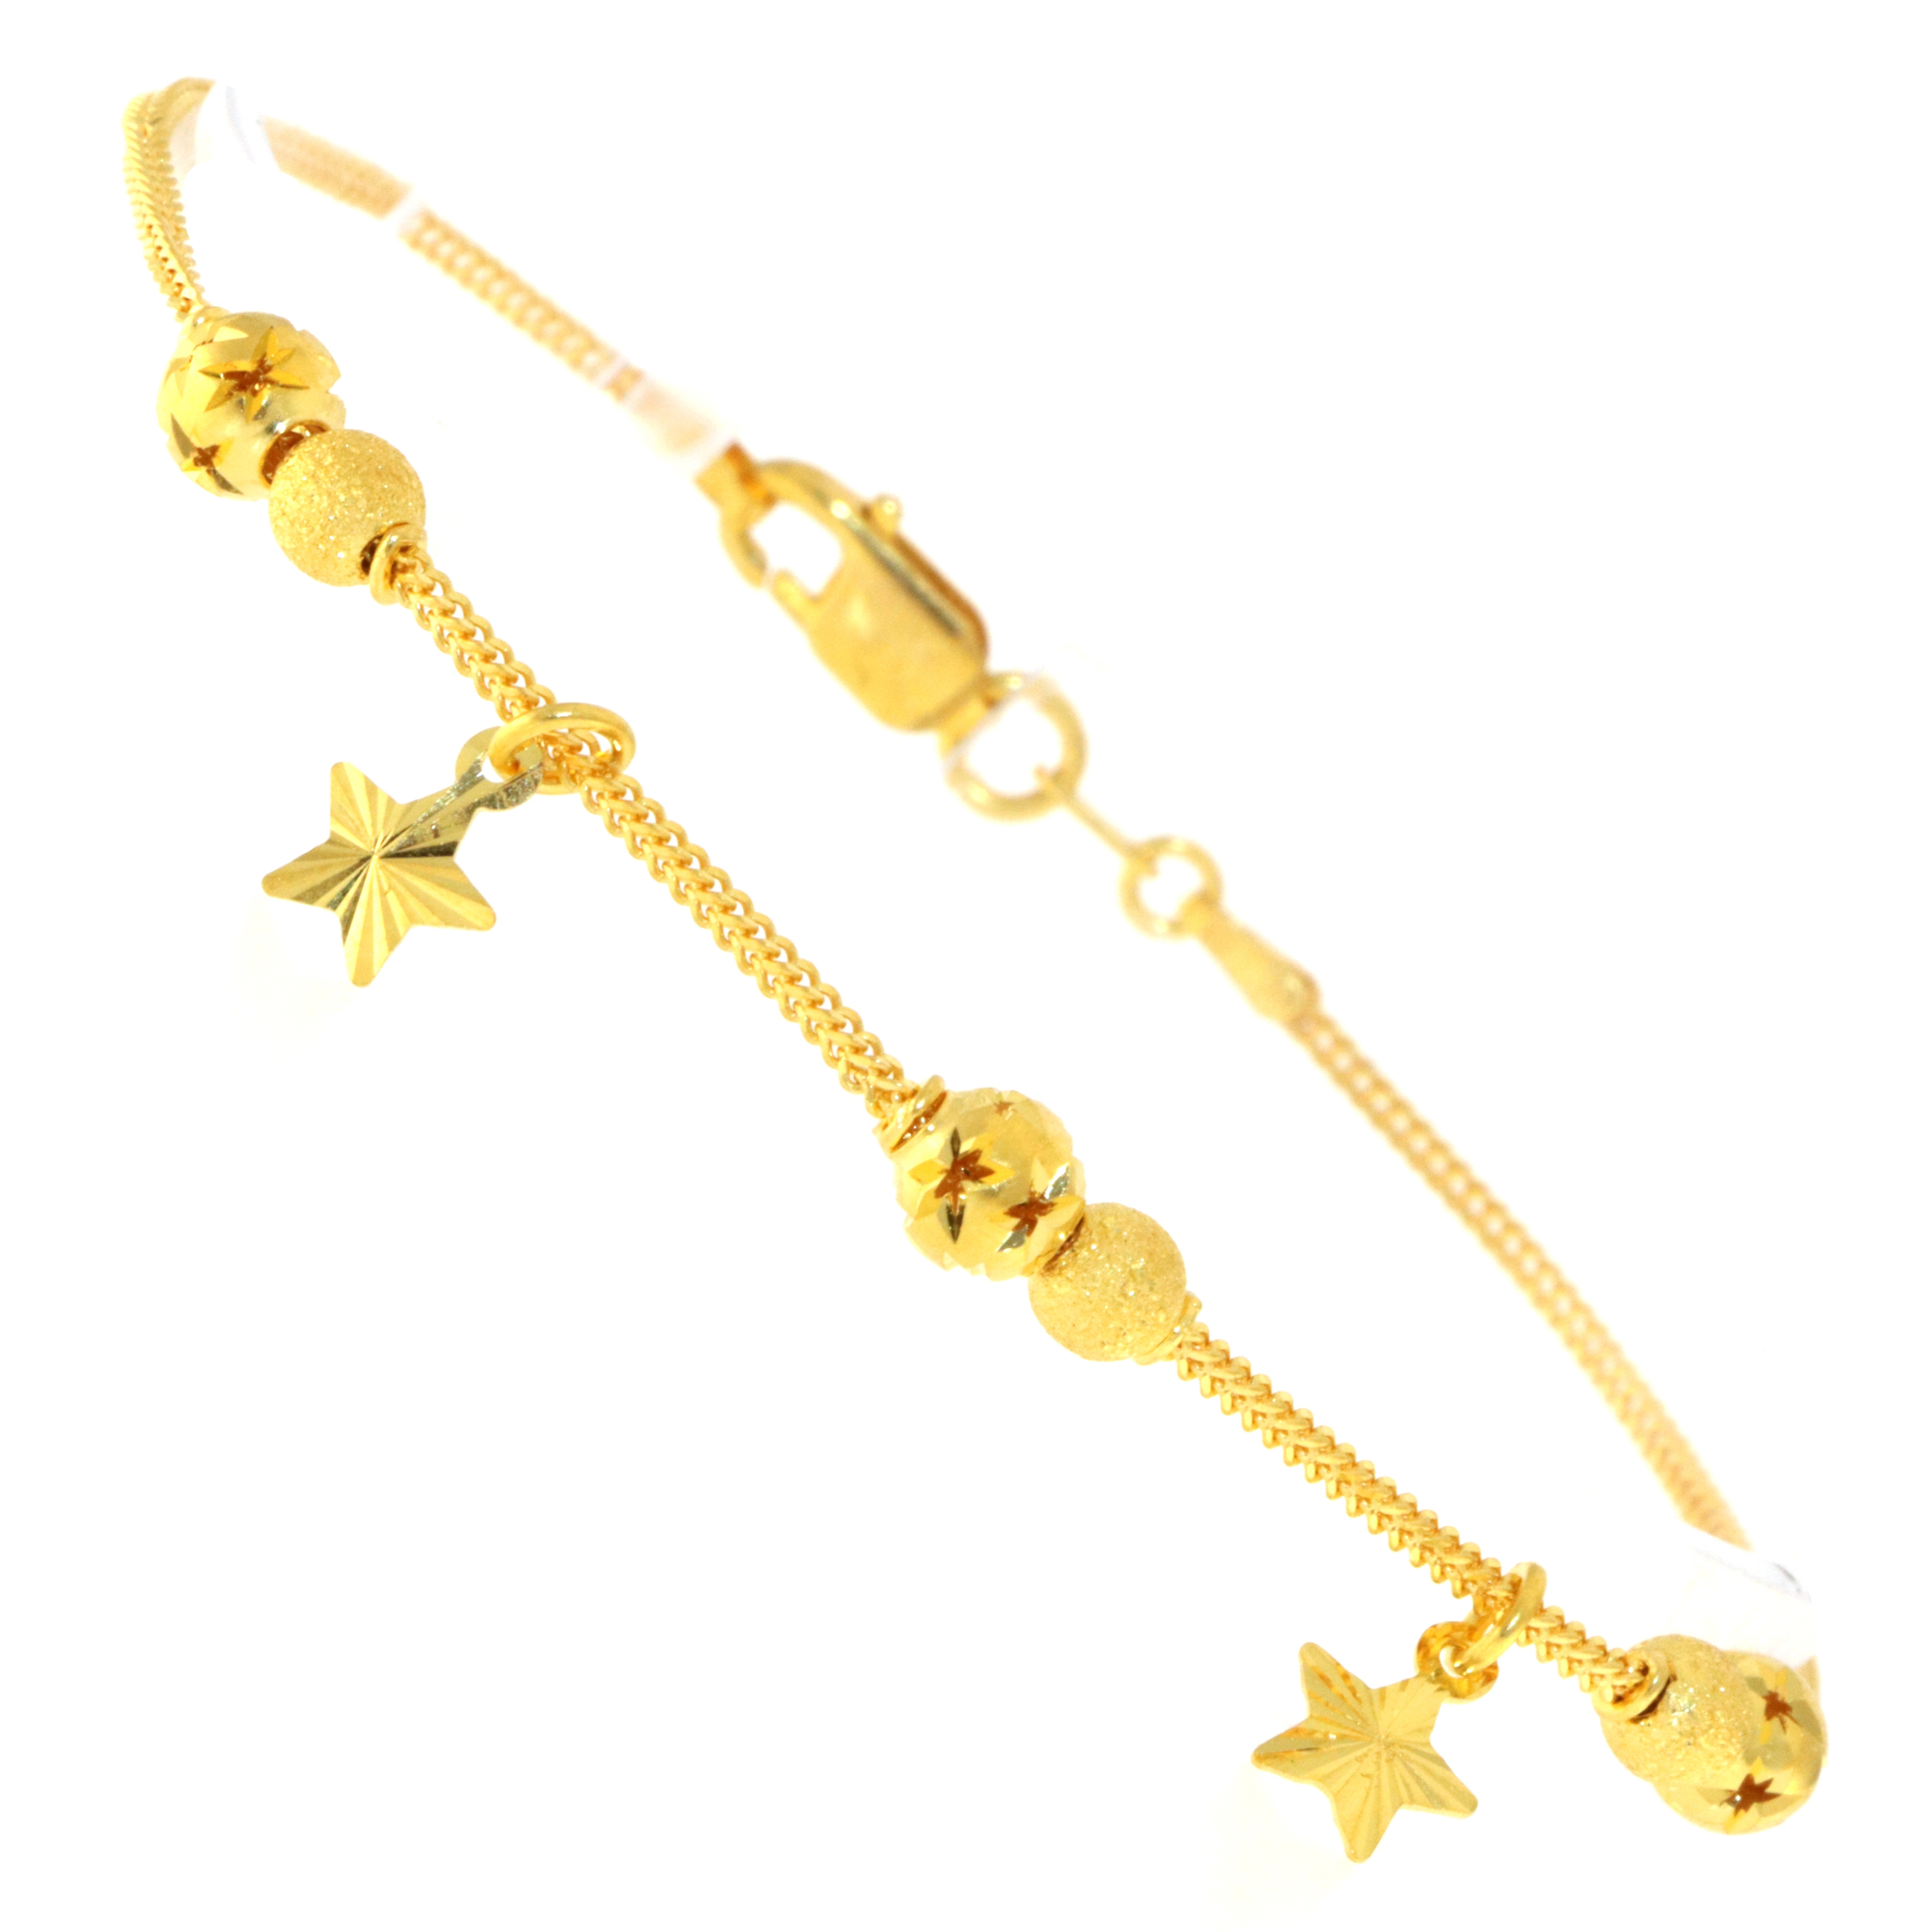 22carat Gold Charm Bracelet